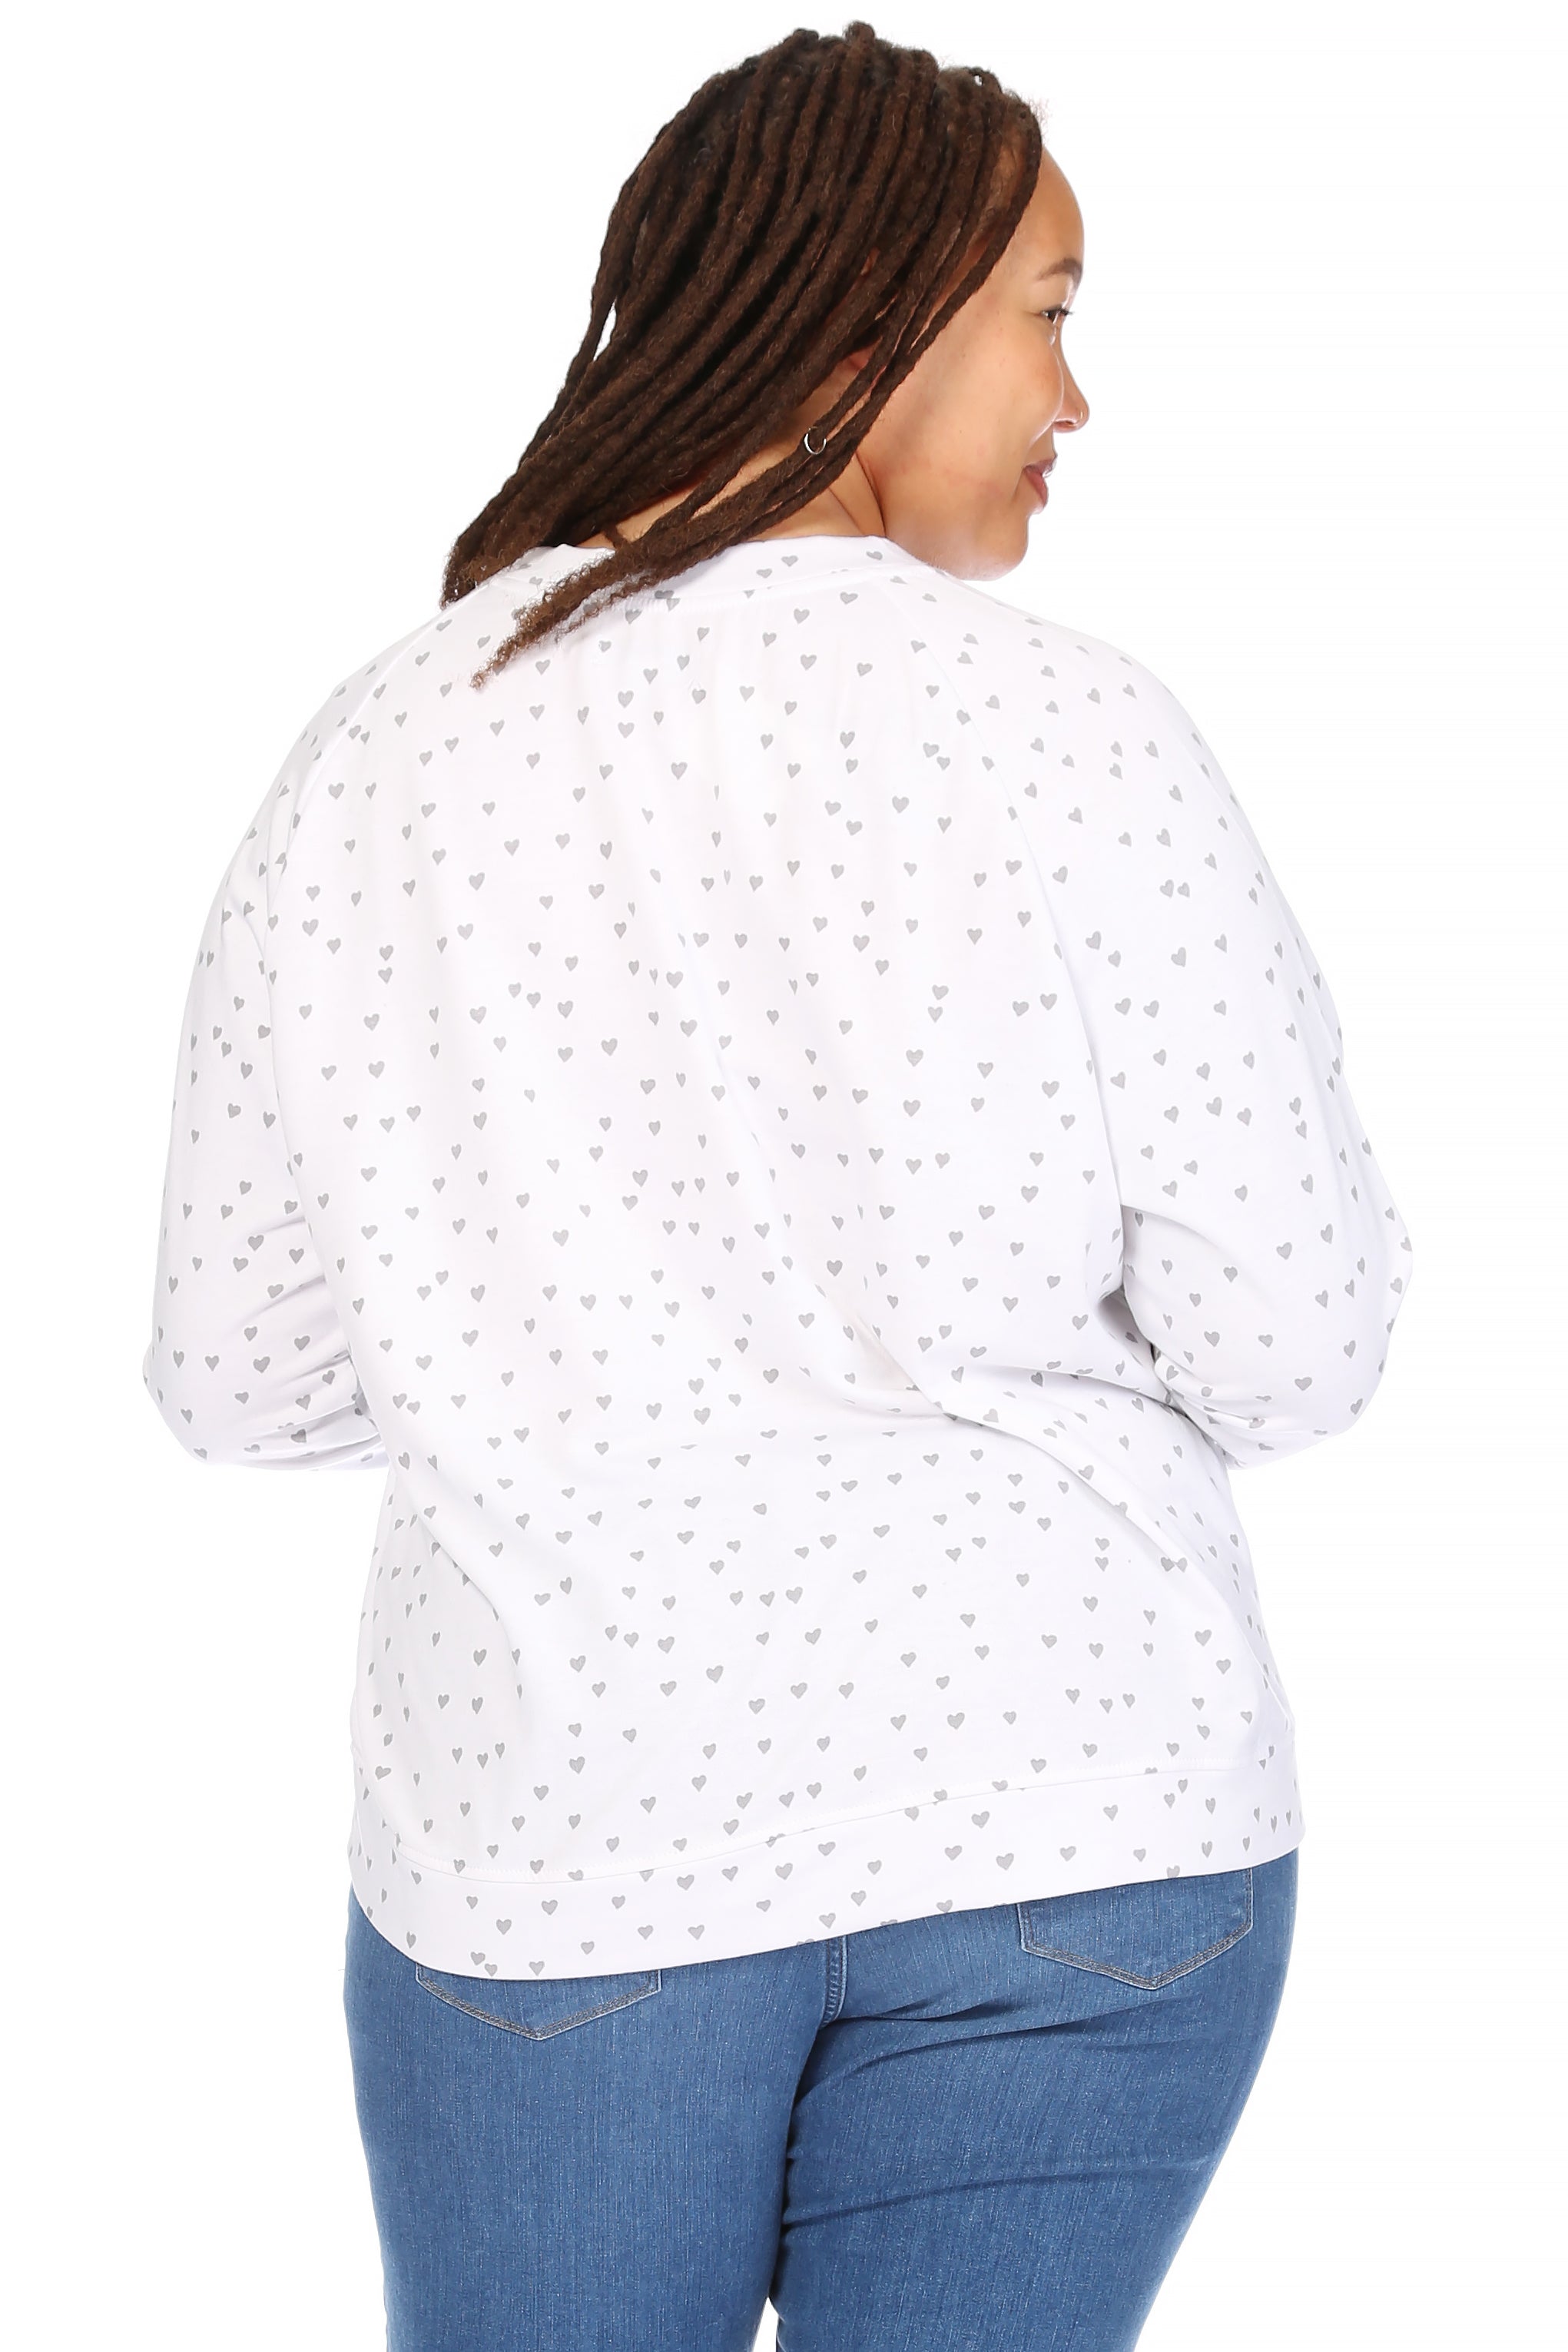 Women's "LOVE" Plus Size Studio Raglan Pullover Sweatshirt - Rae Dunn Wear